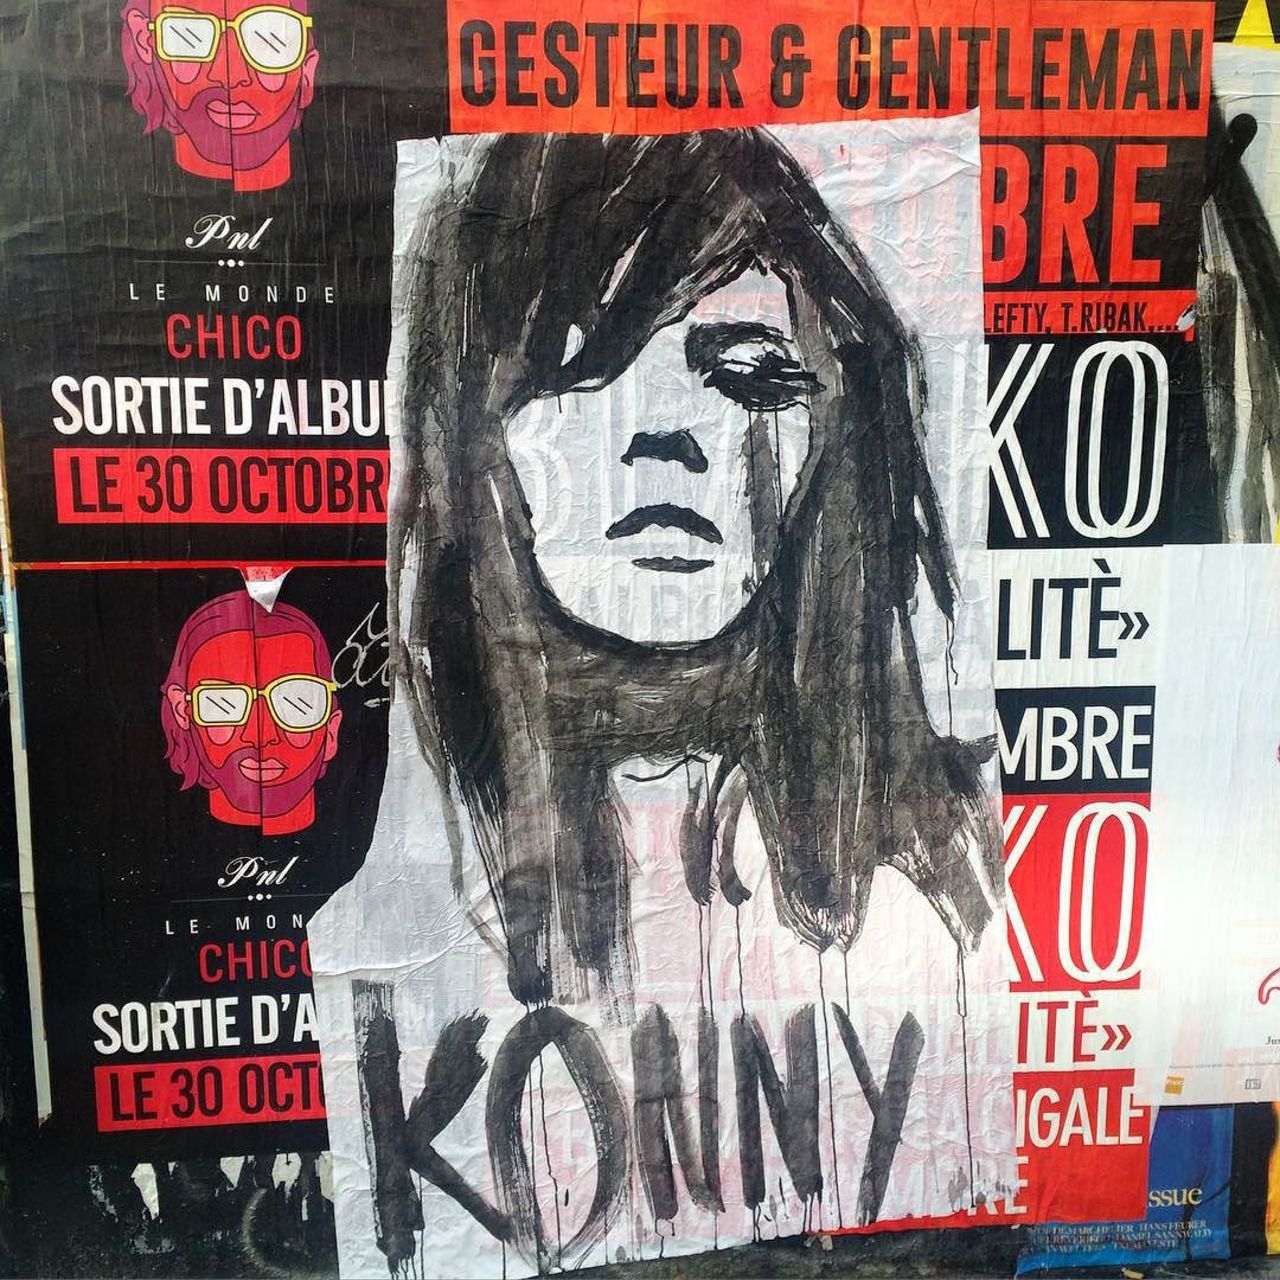 #Paris #graffiti photo by @benapix http://ift.tt/1RsAv3f #StreetArt https://t.co/4RQyLZaRnX